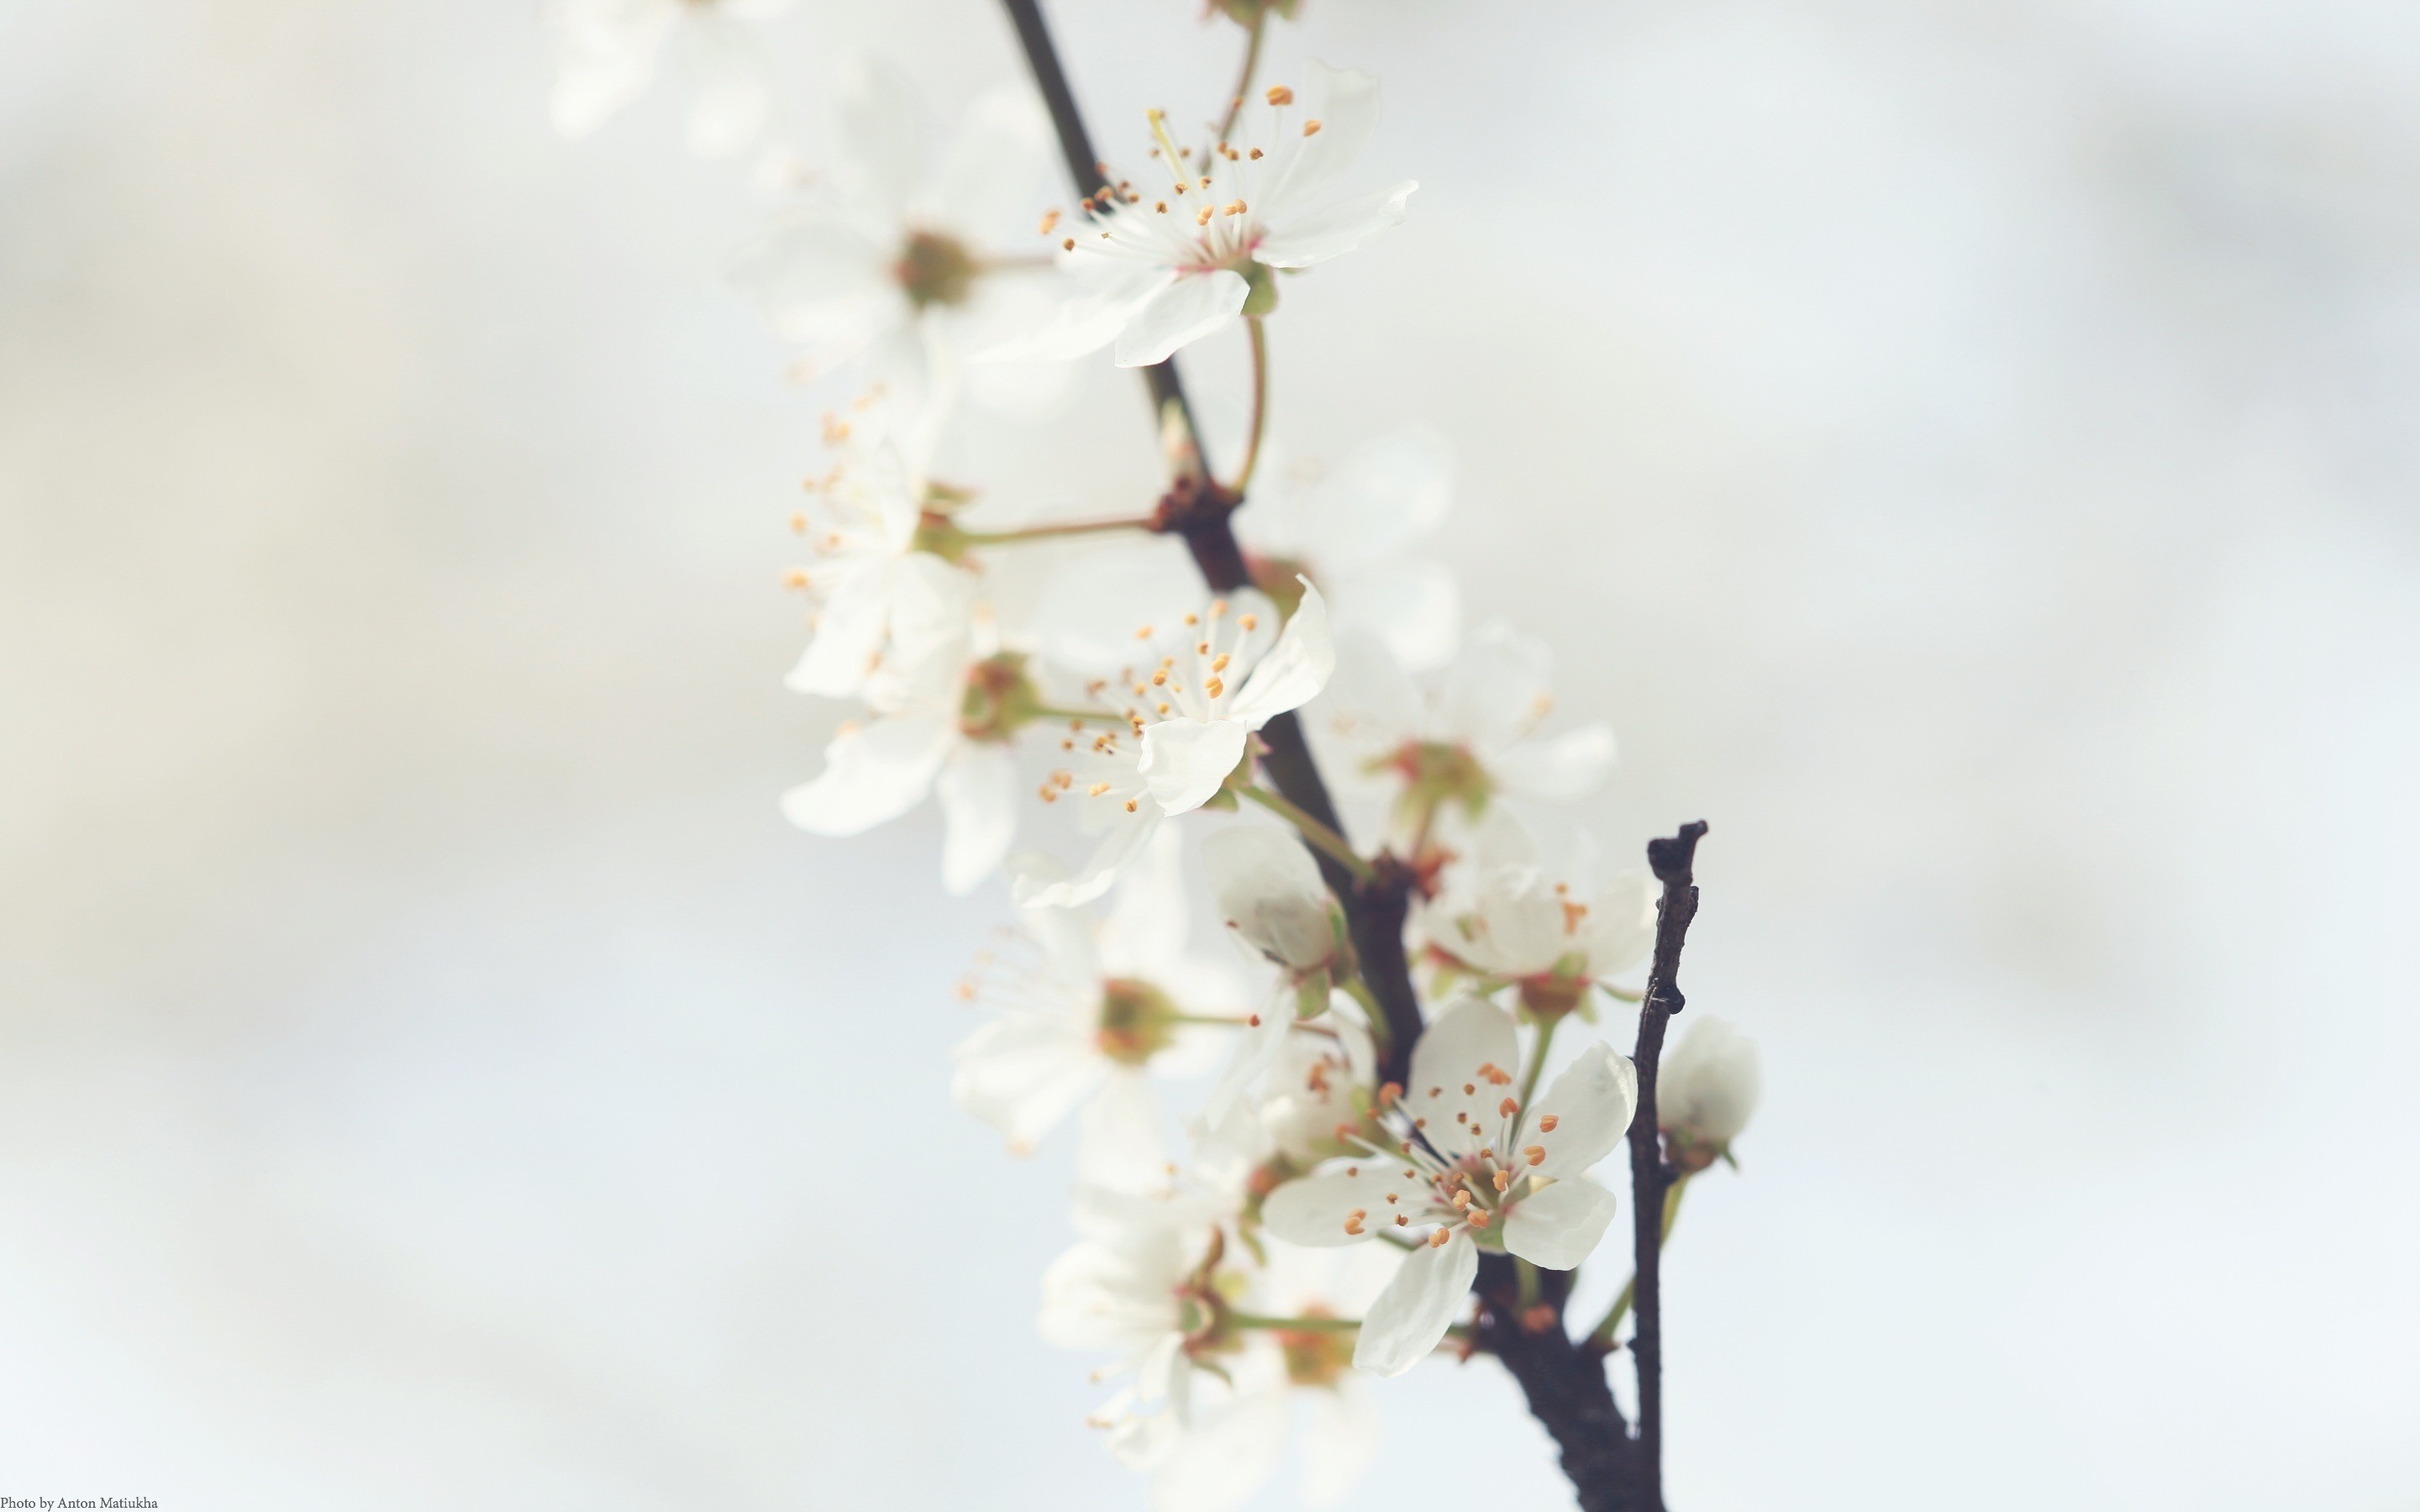 General 2880x1800 cherry trees flowers blossoms branch white flowers plants DeviantArt closeup simple background